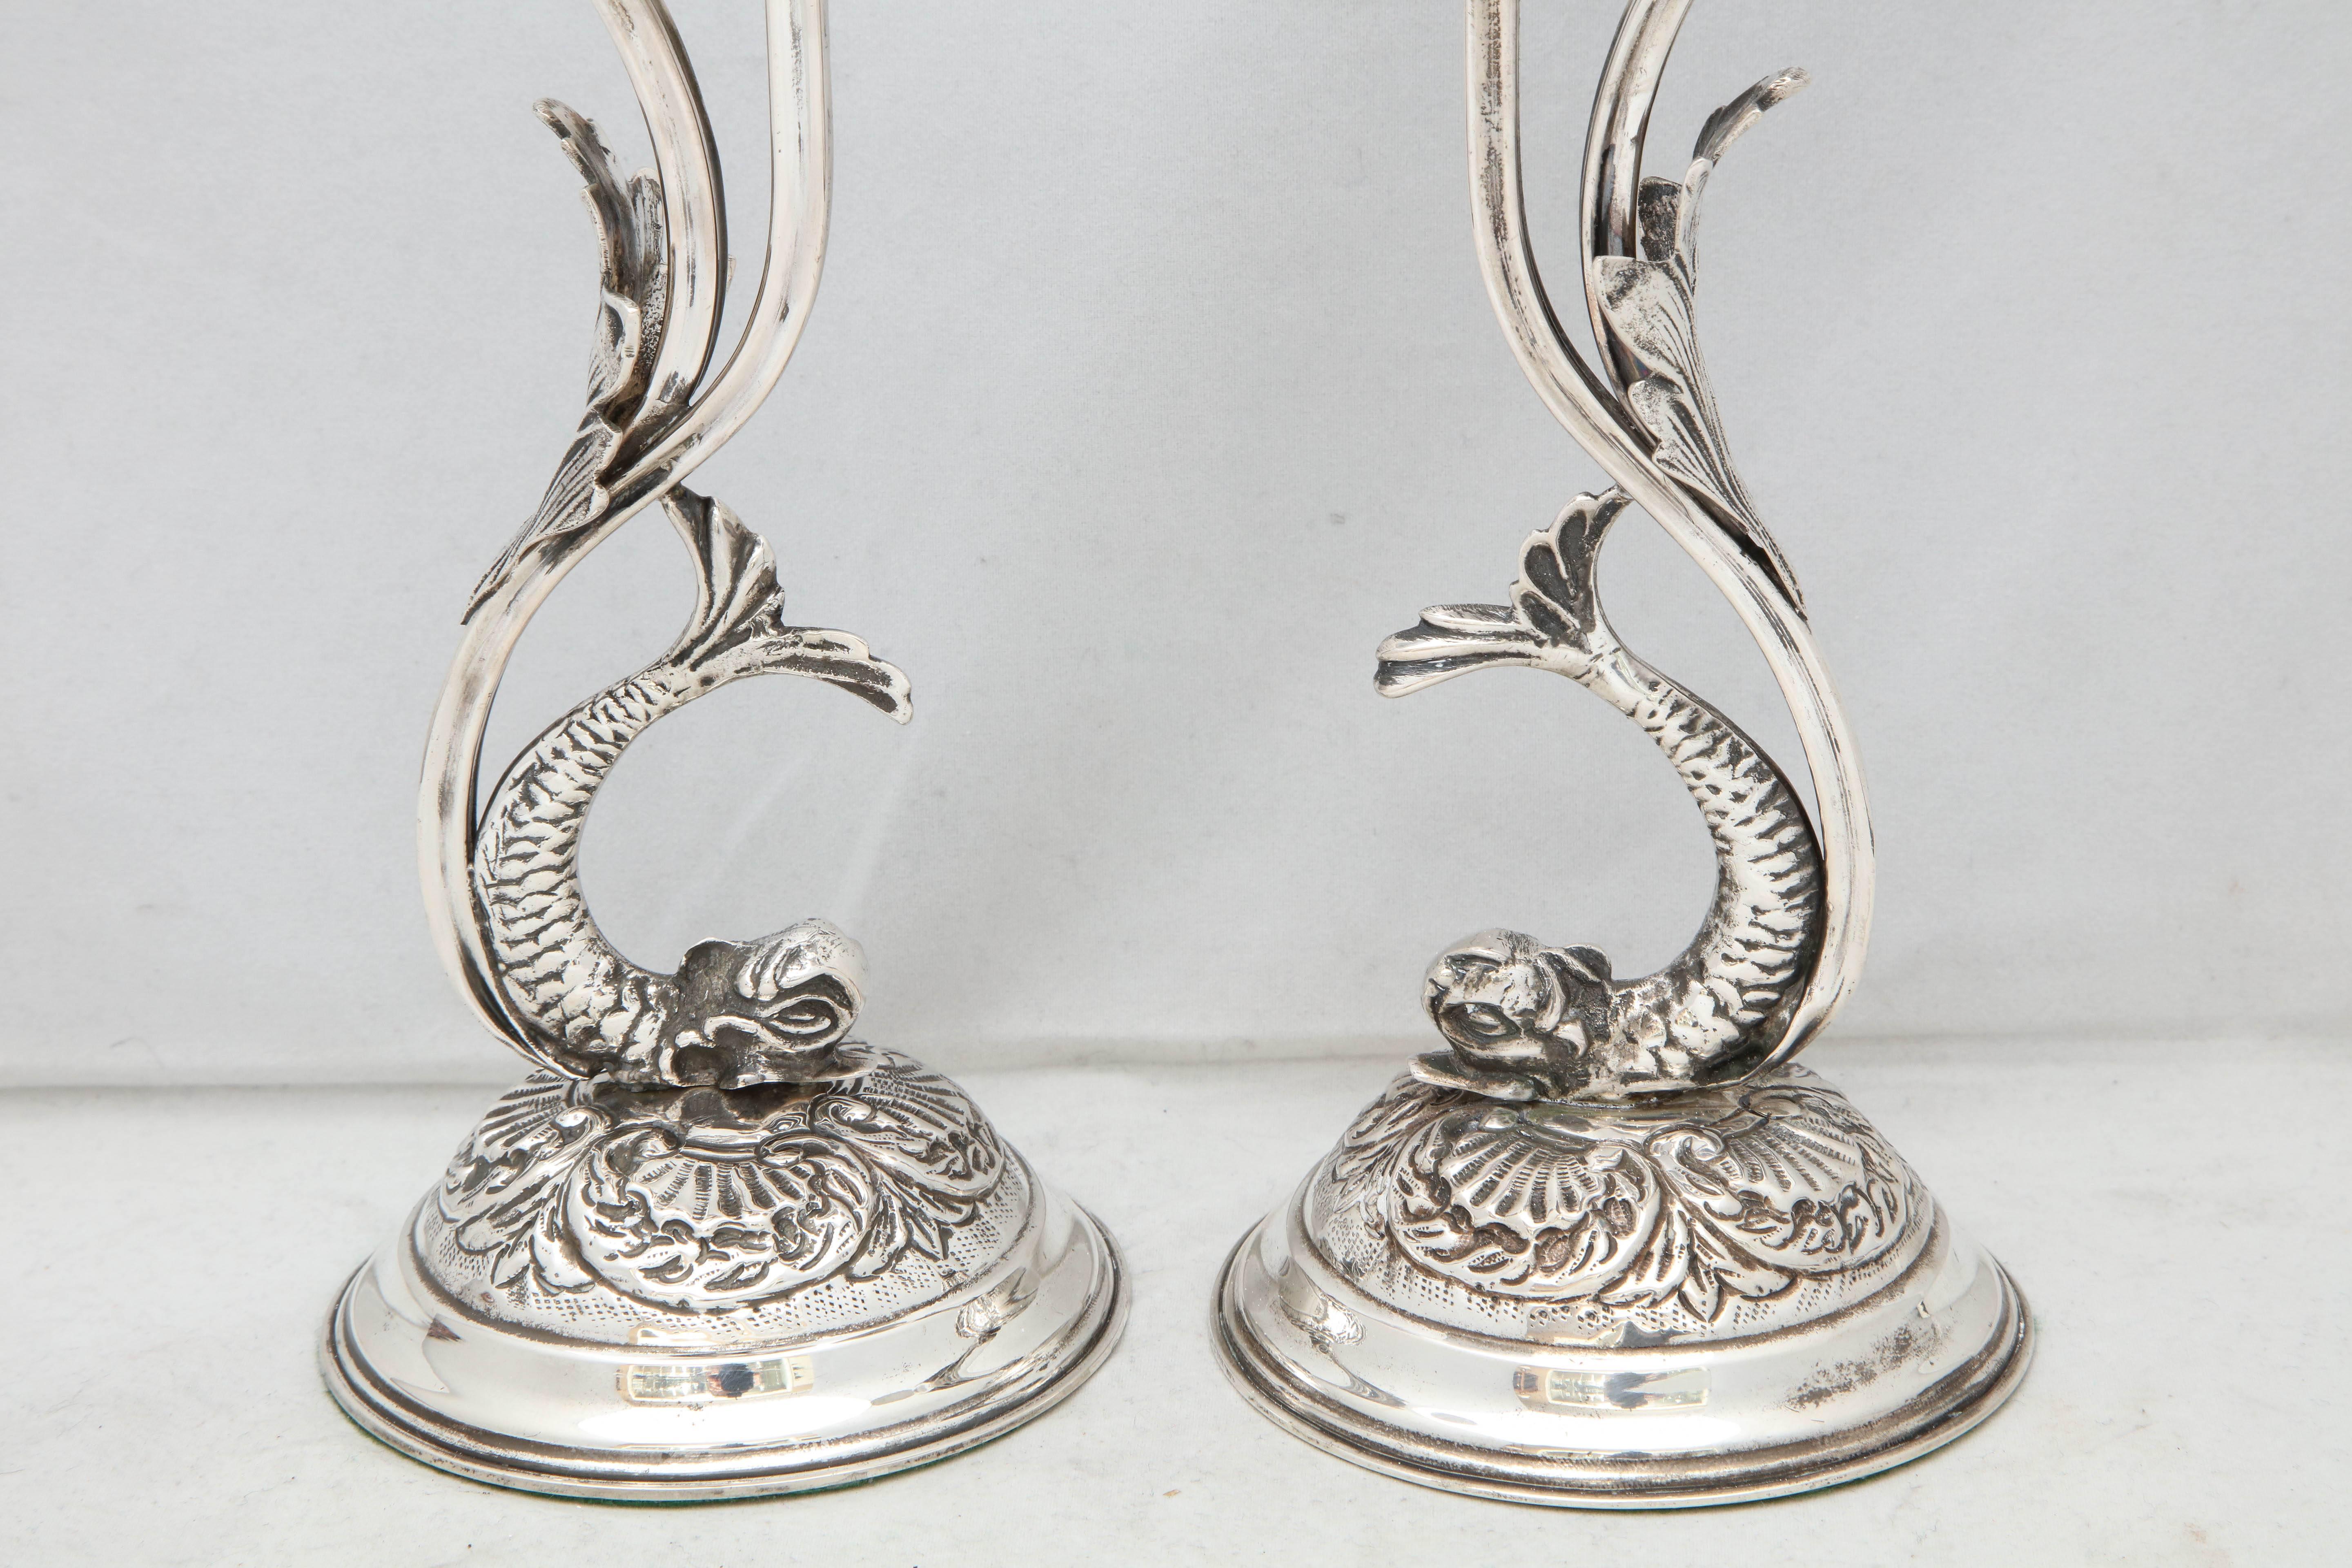  Paar kontinentale Silber-Kerzenständer in Delphinform im Jugendstil (Art nouveau)